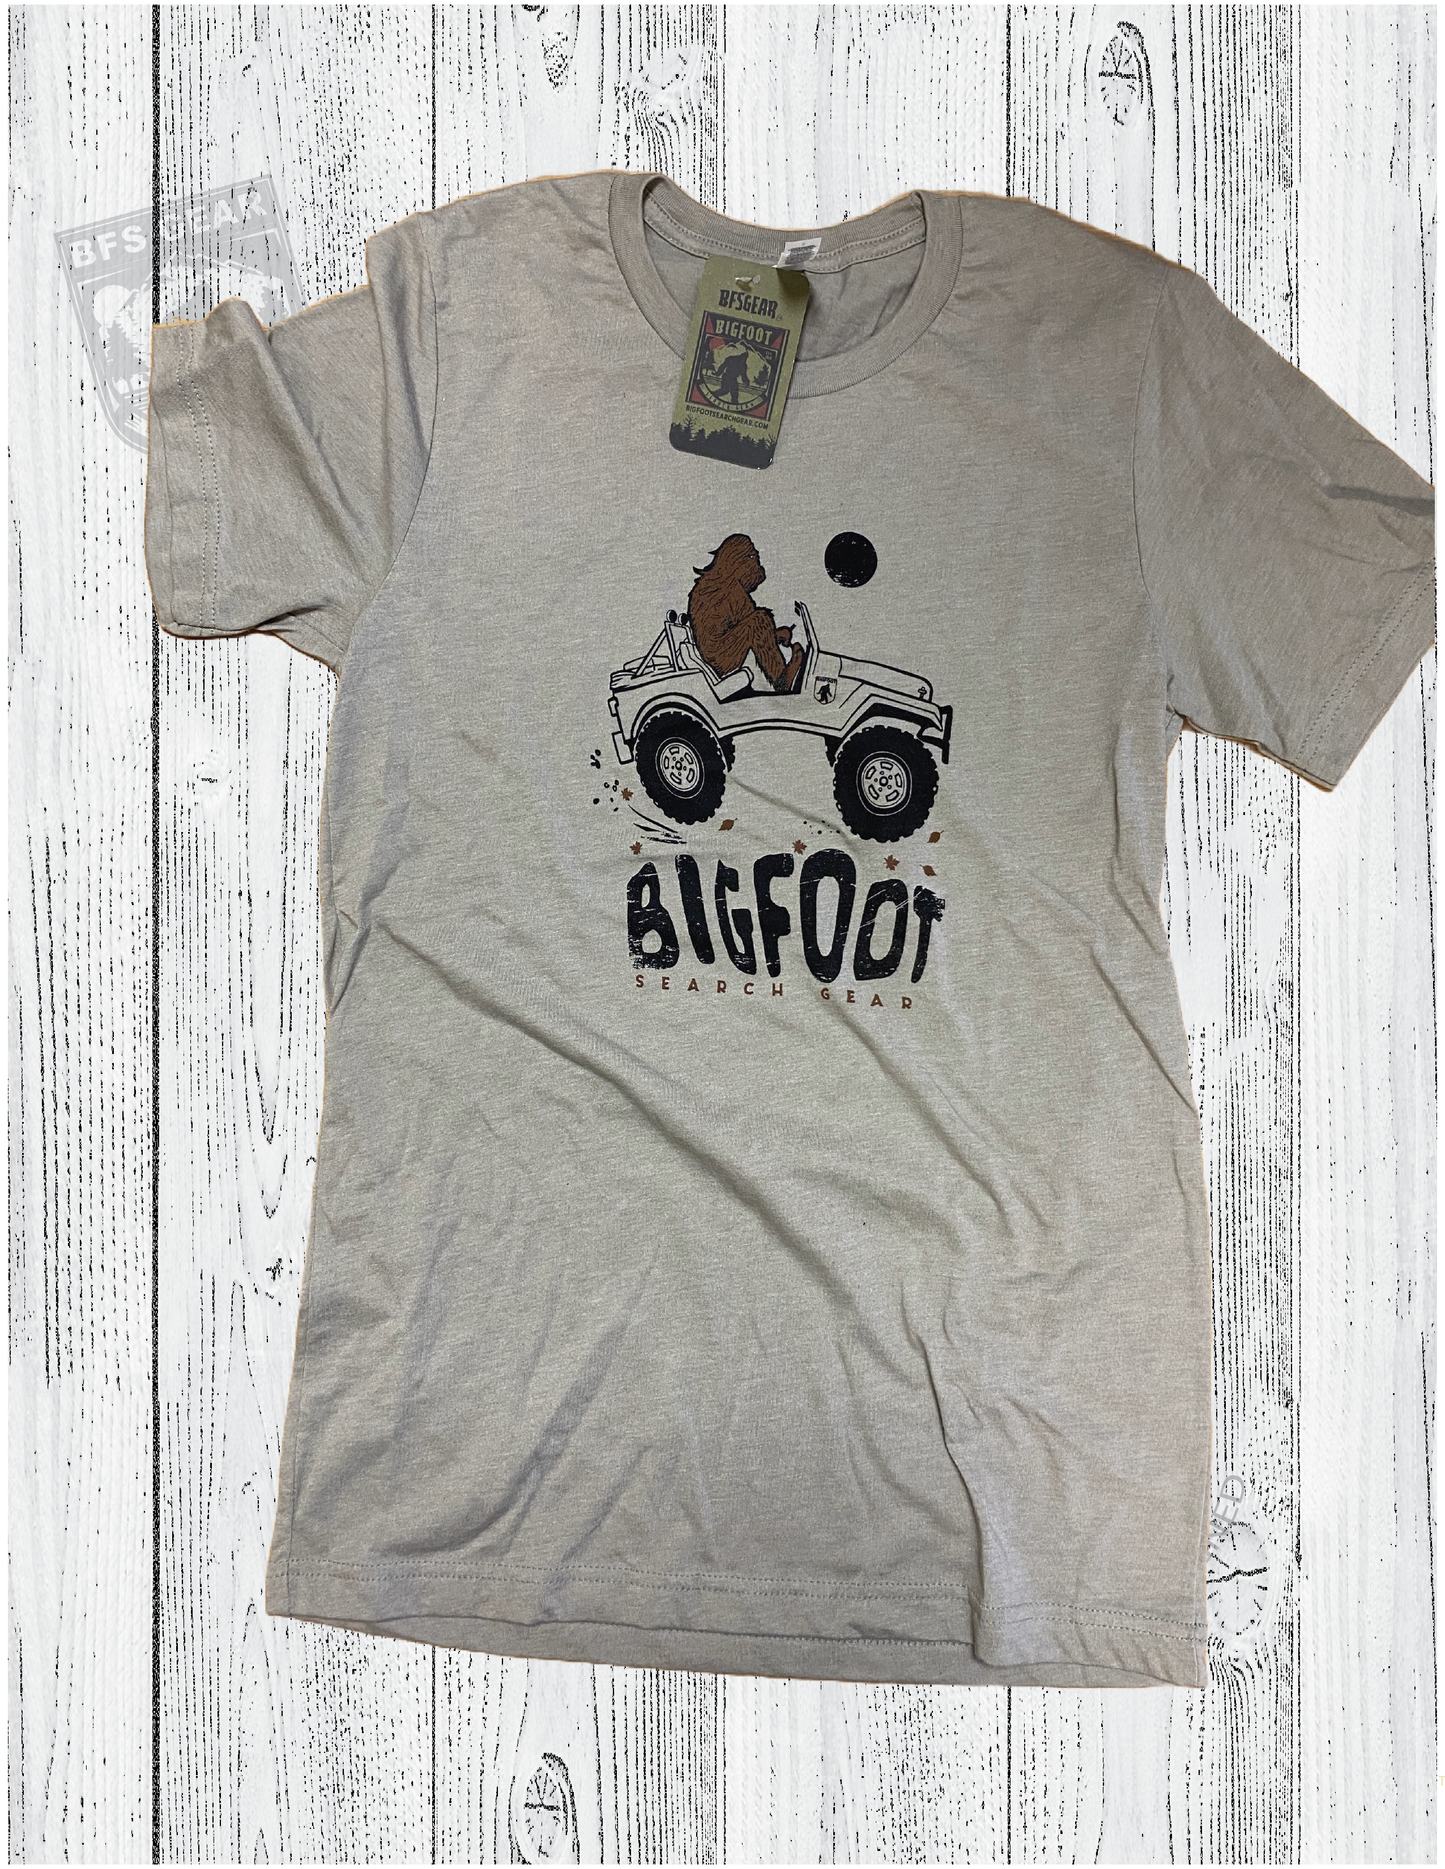 Bigfoot Offroad T-Shirt